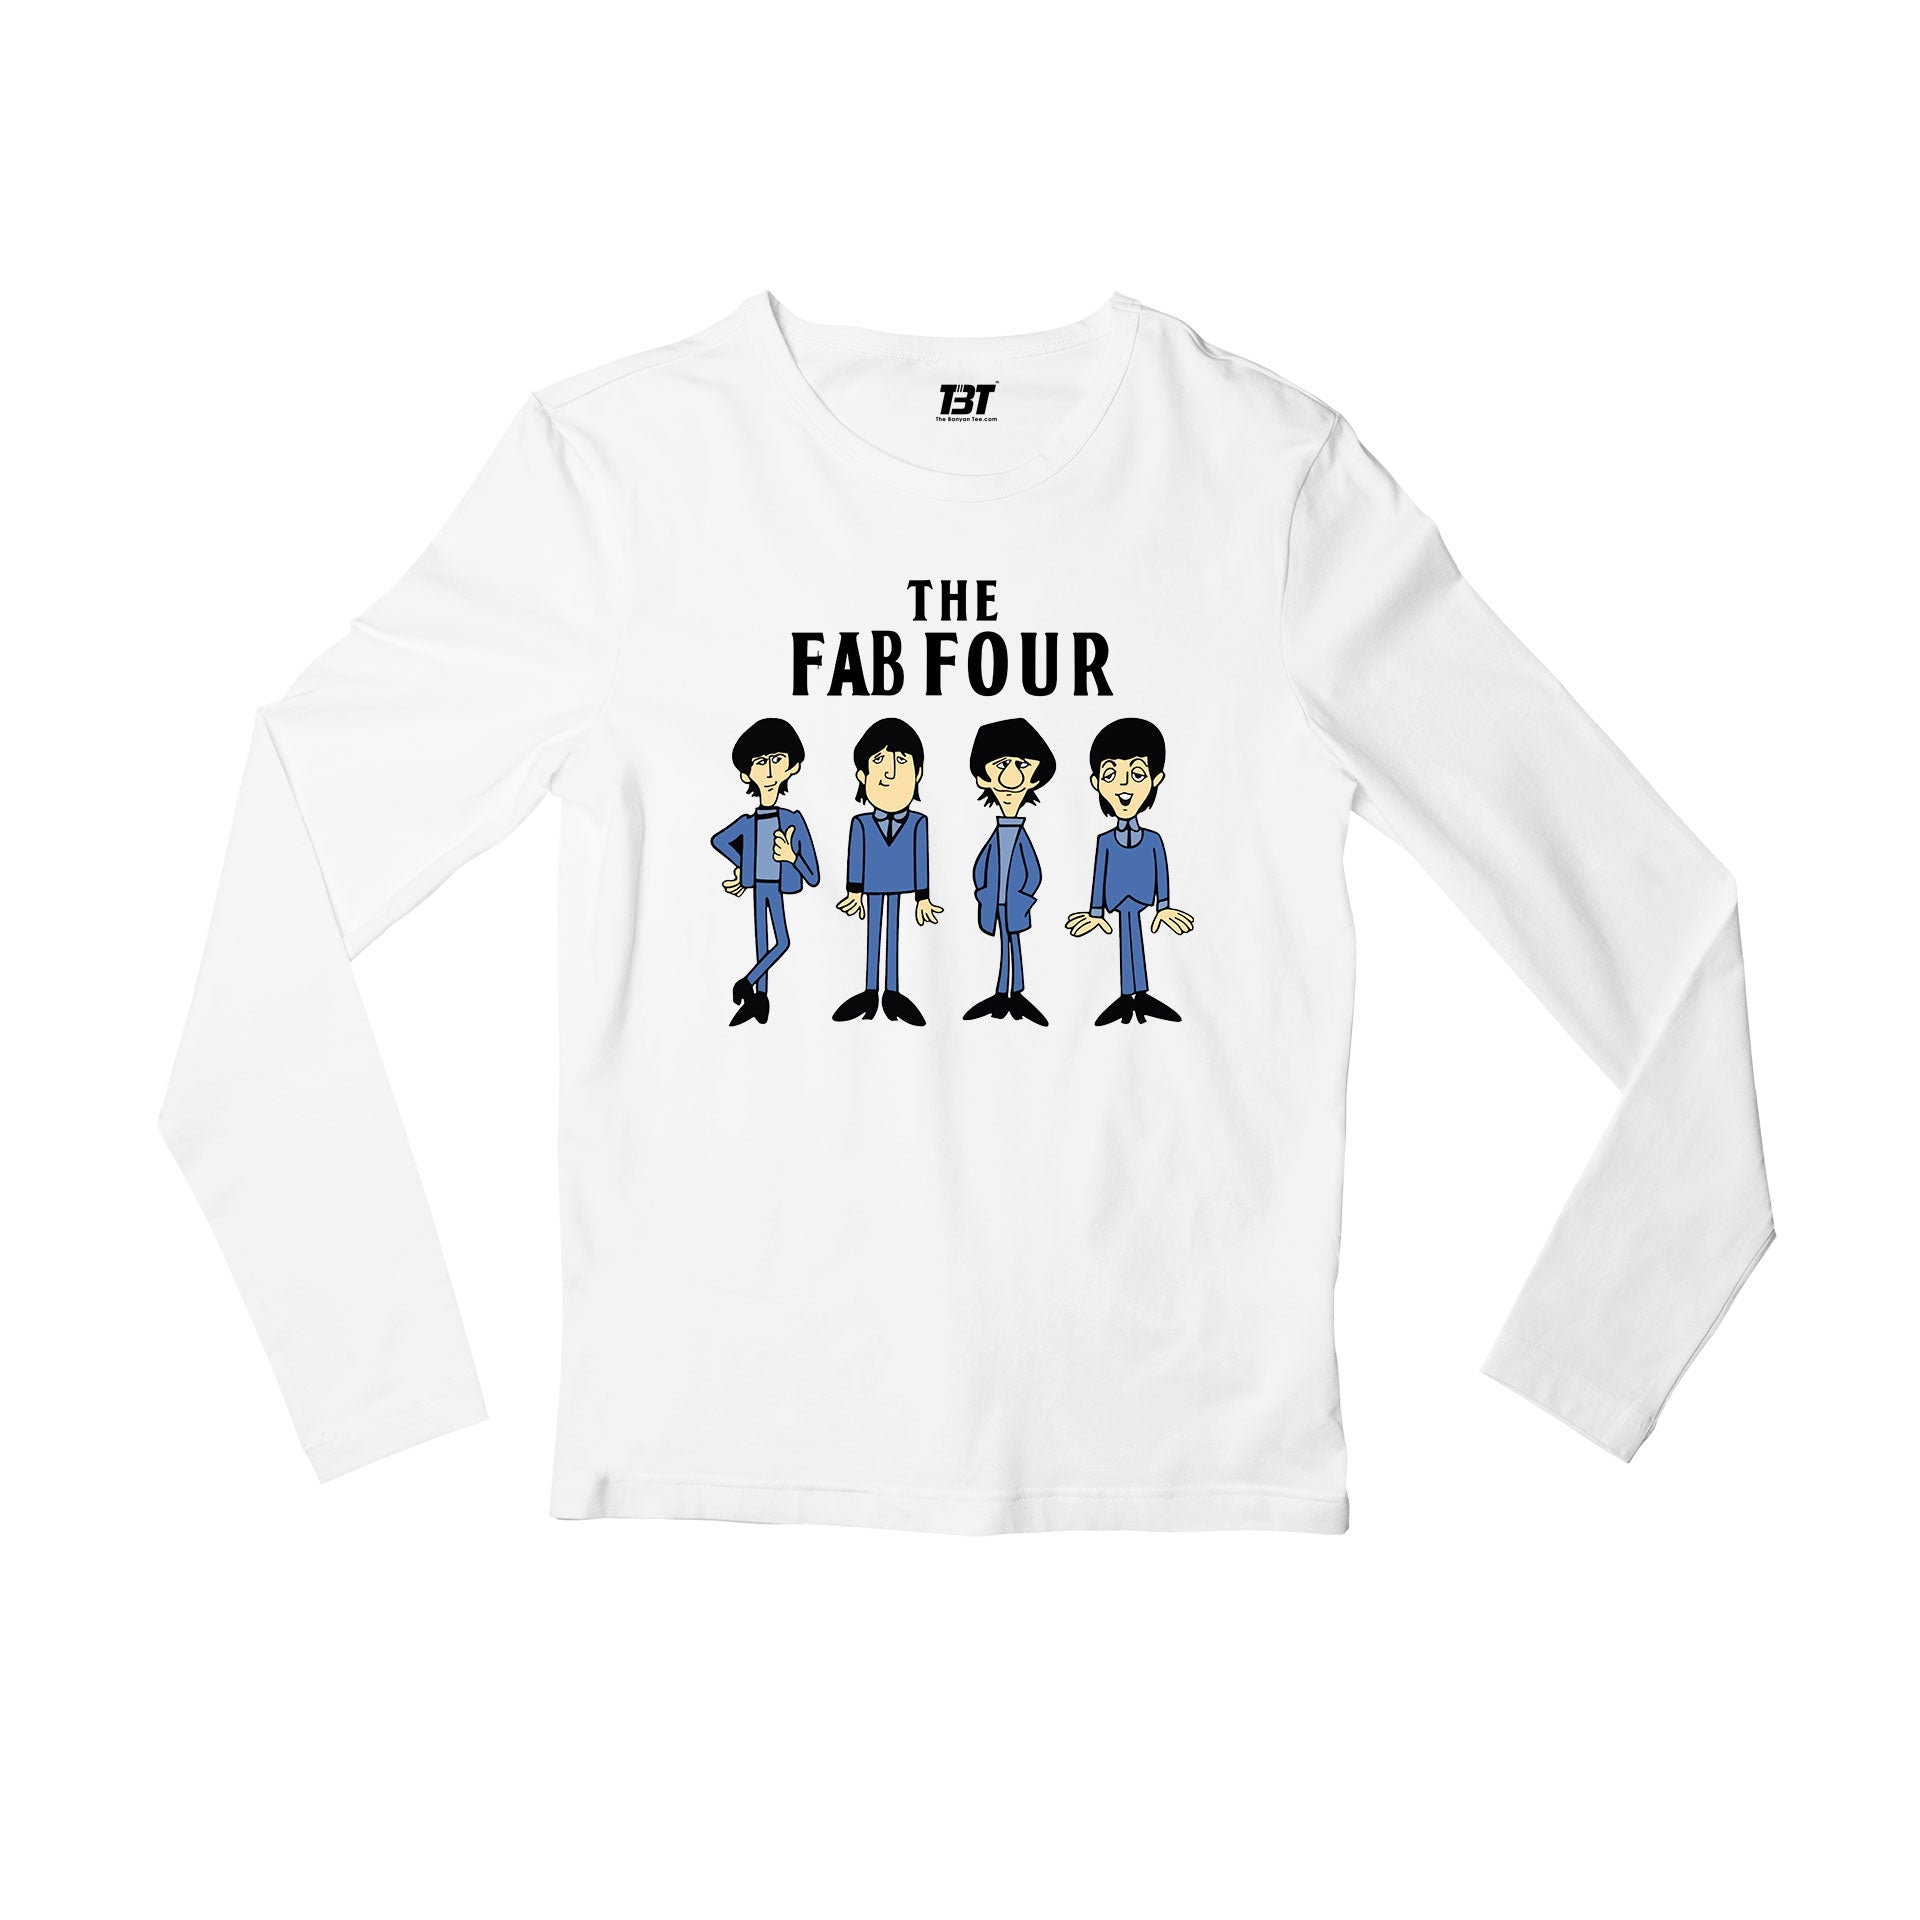 The Beatles Full Sleeves T-shirt Long Sleeves The Banyan Tee TBT